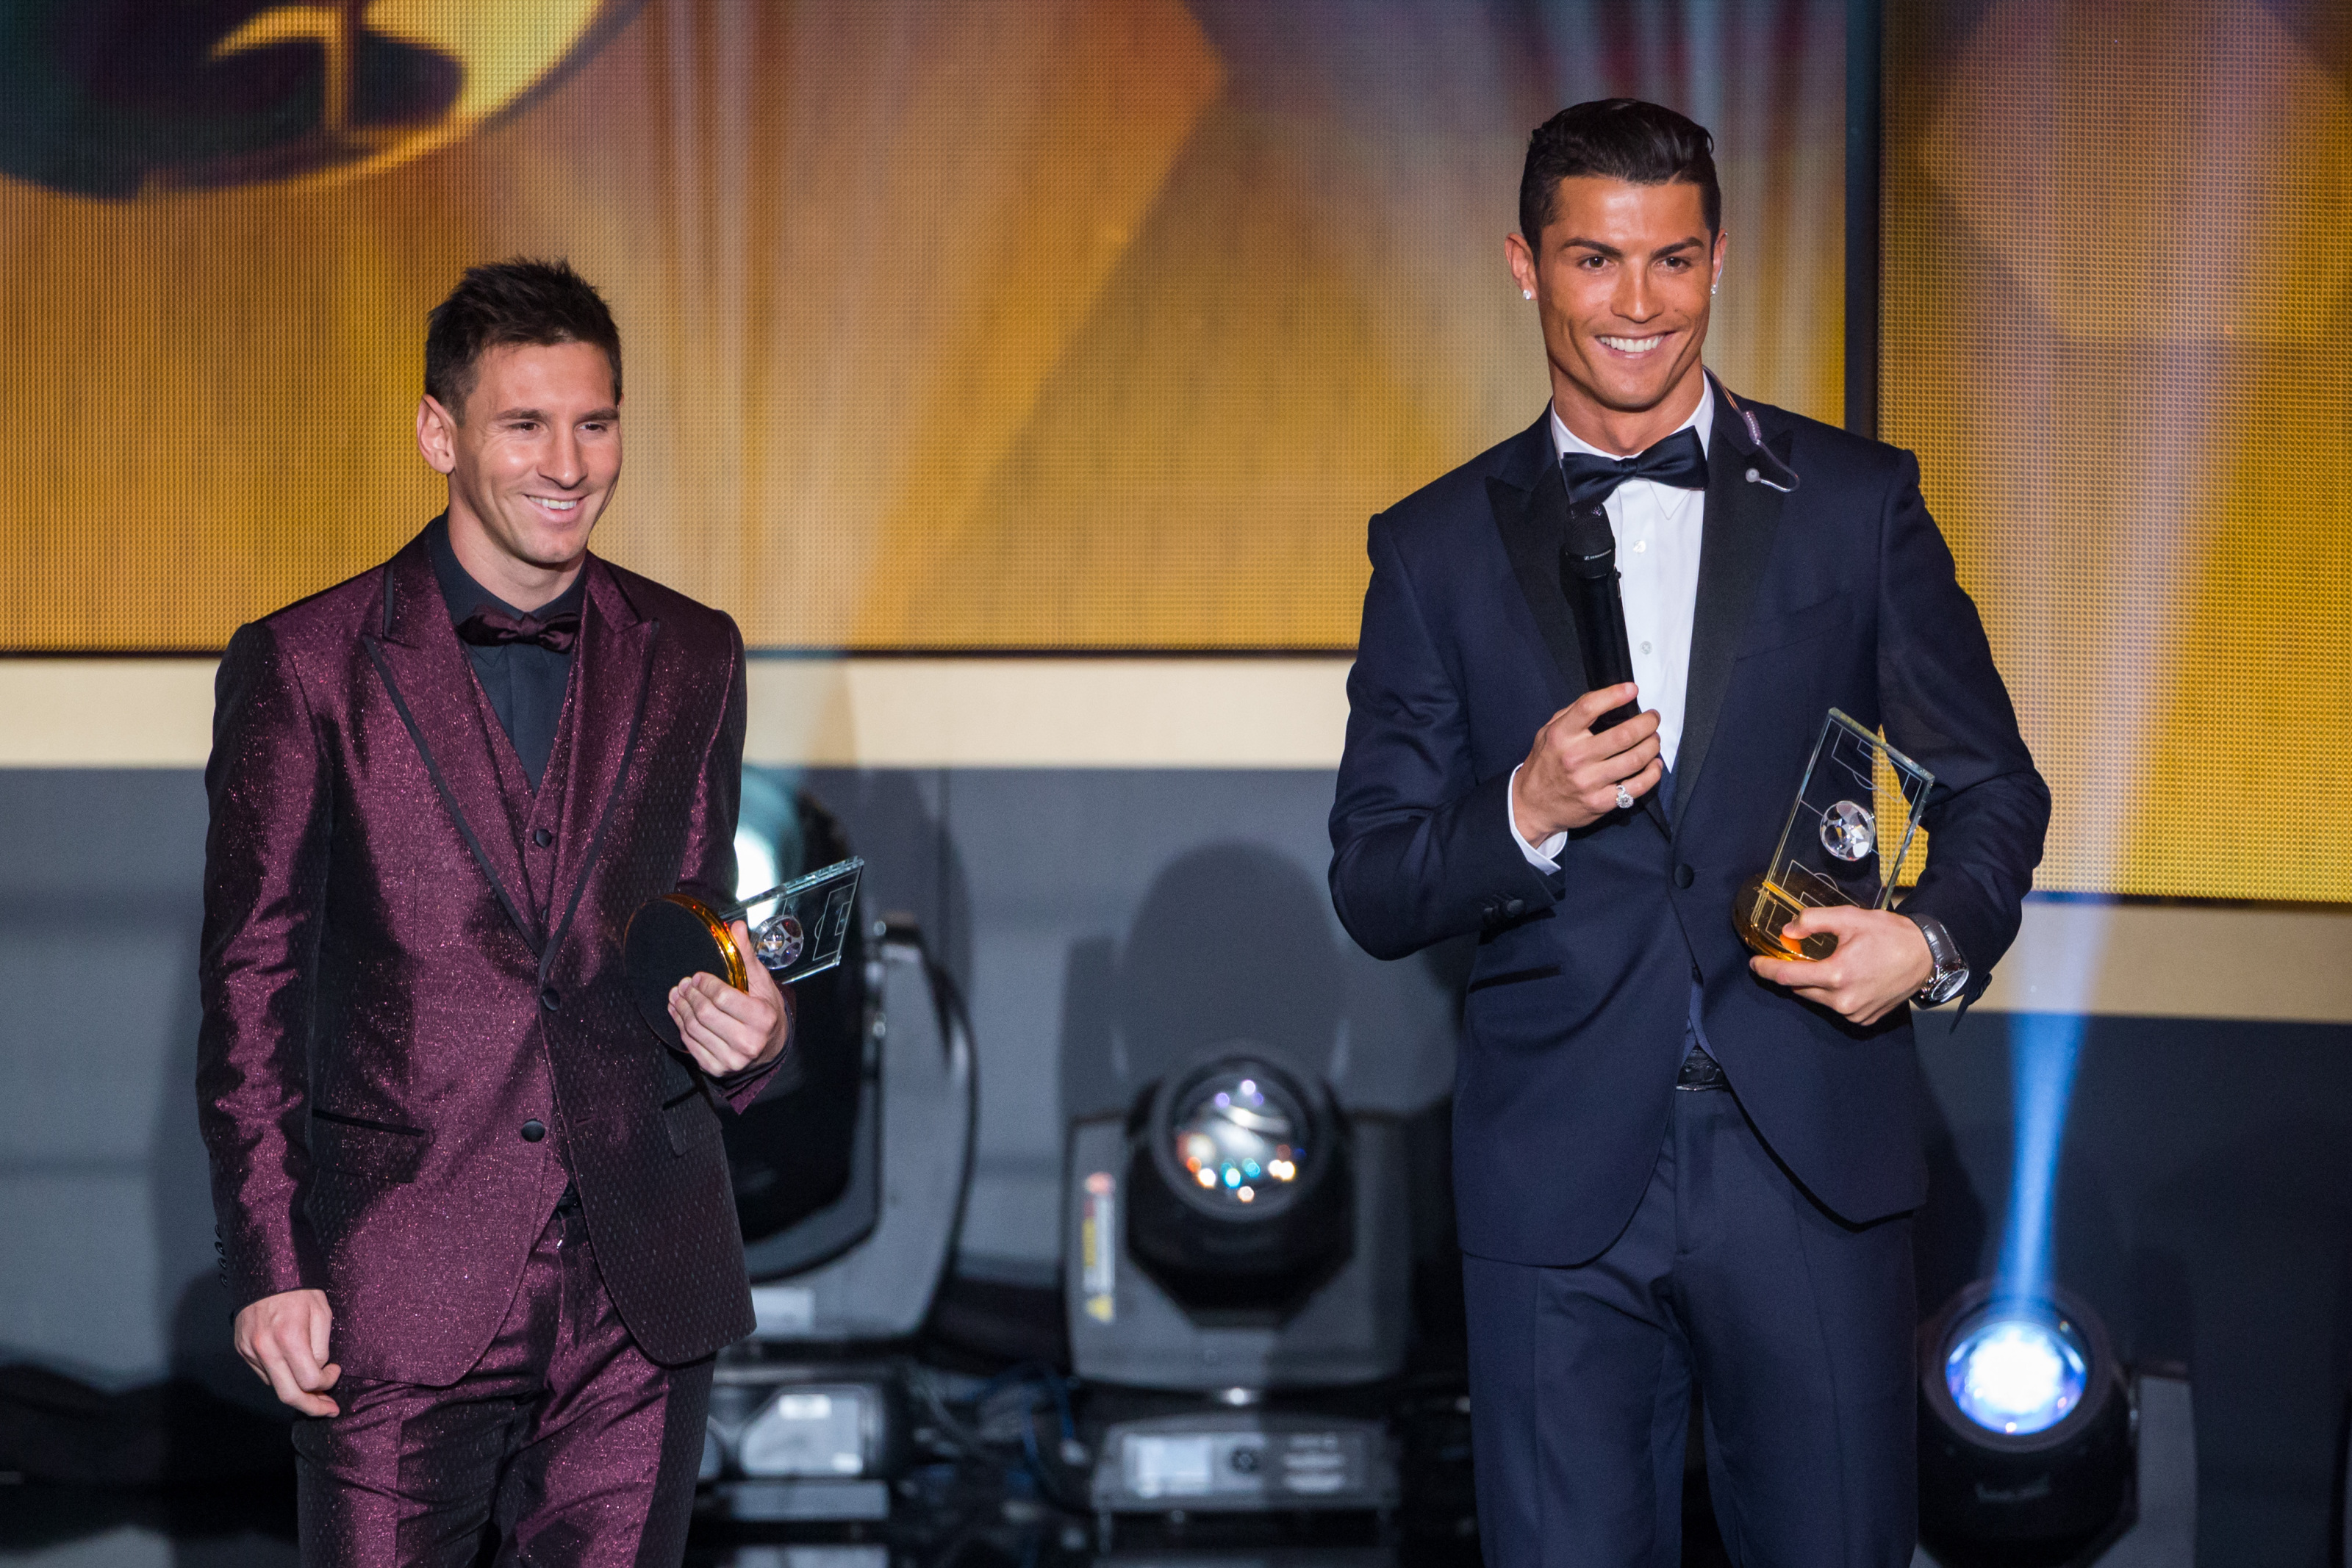 Ronaldo x Messi for LV 😍👀 #louisvuitton #messi #ronaldo #fashiontikt